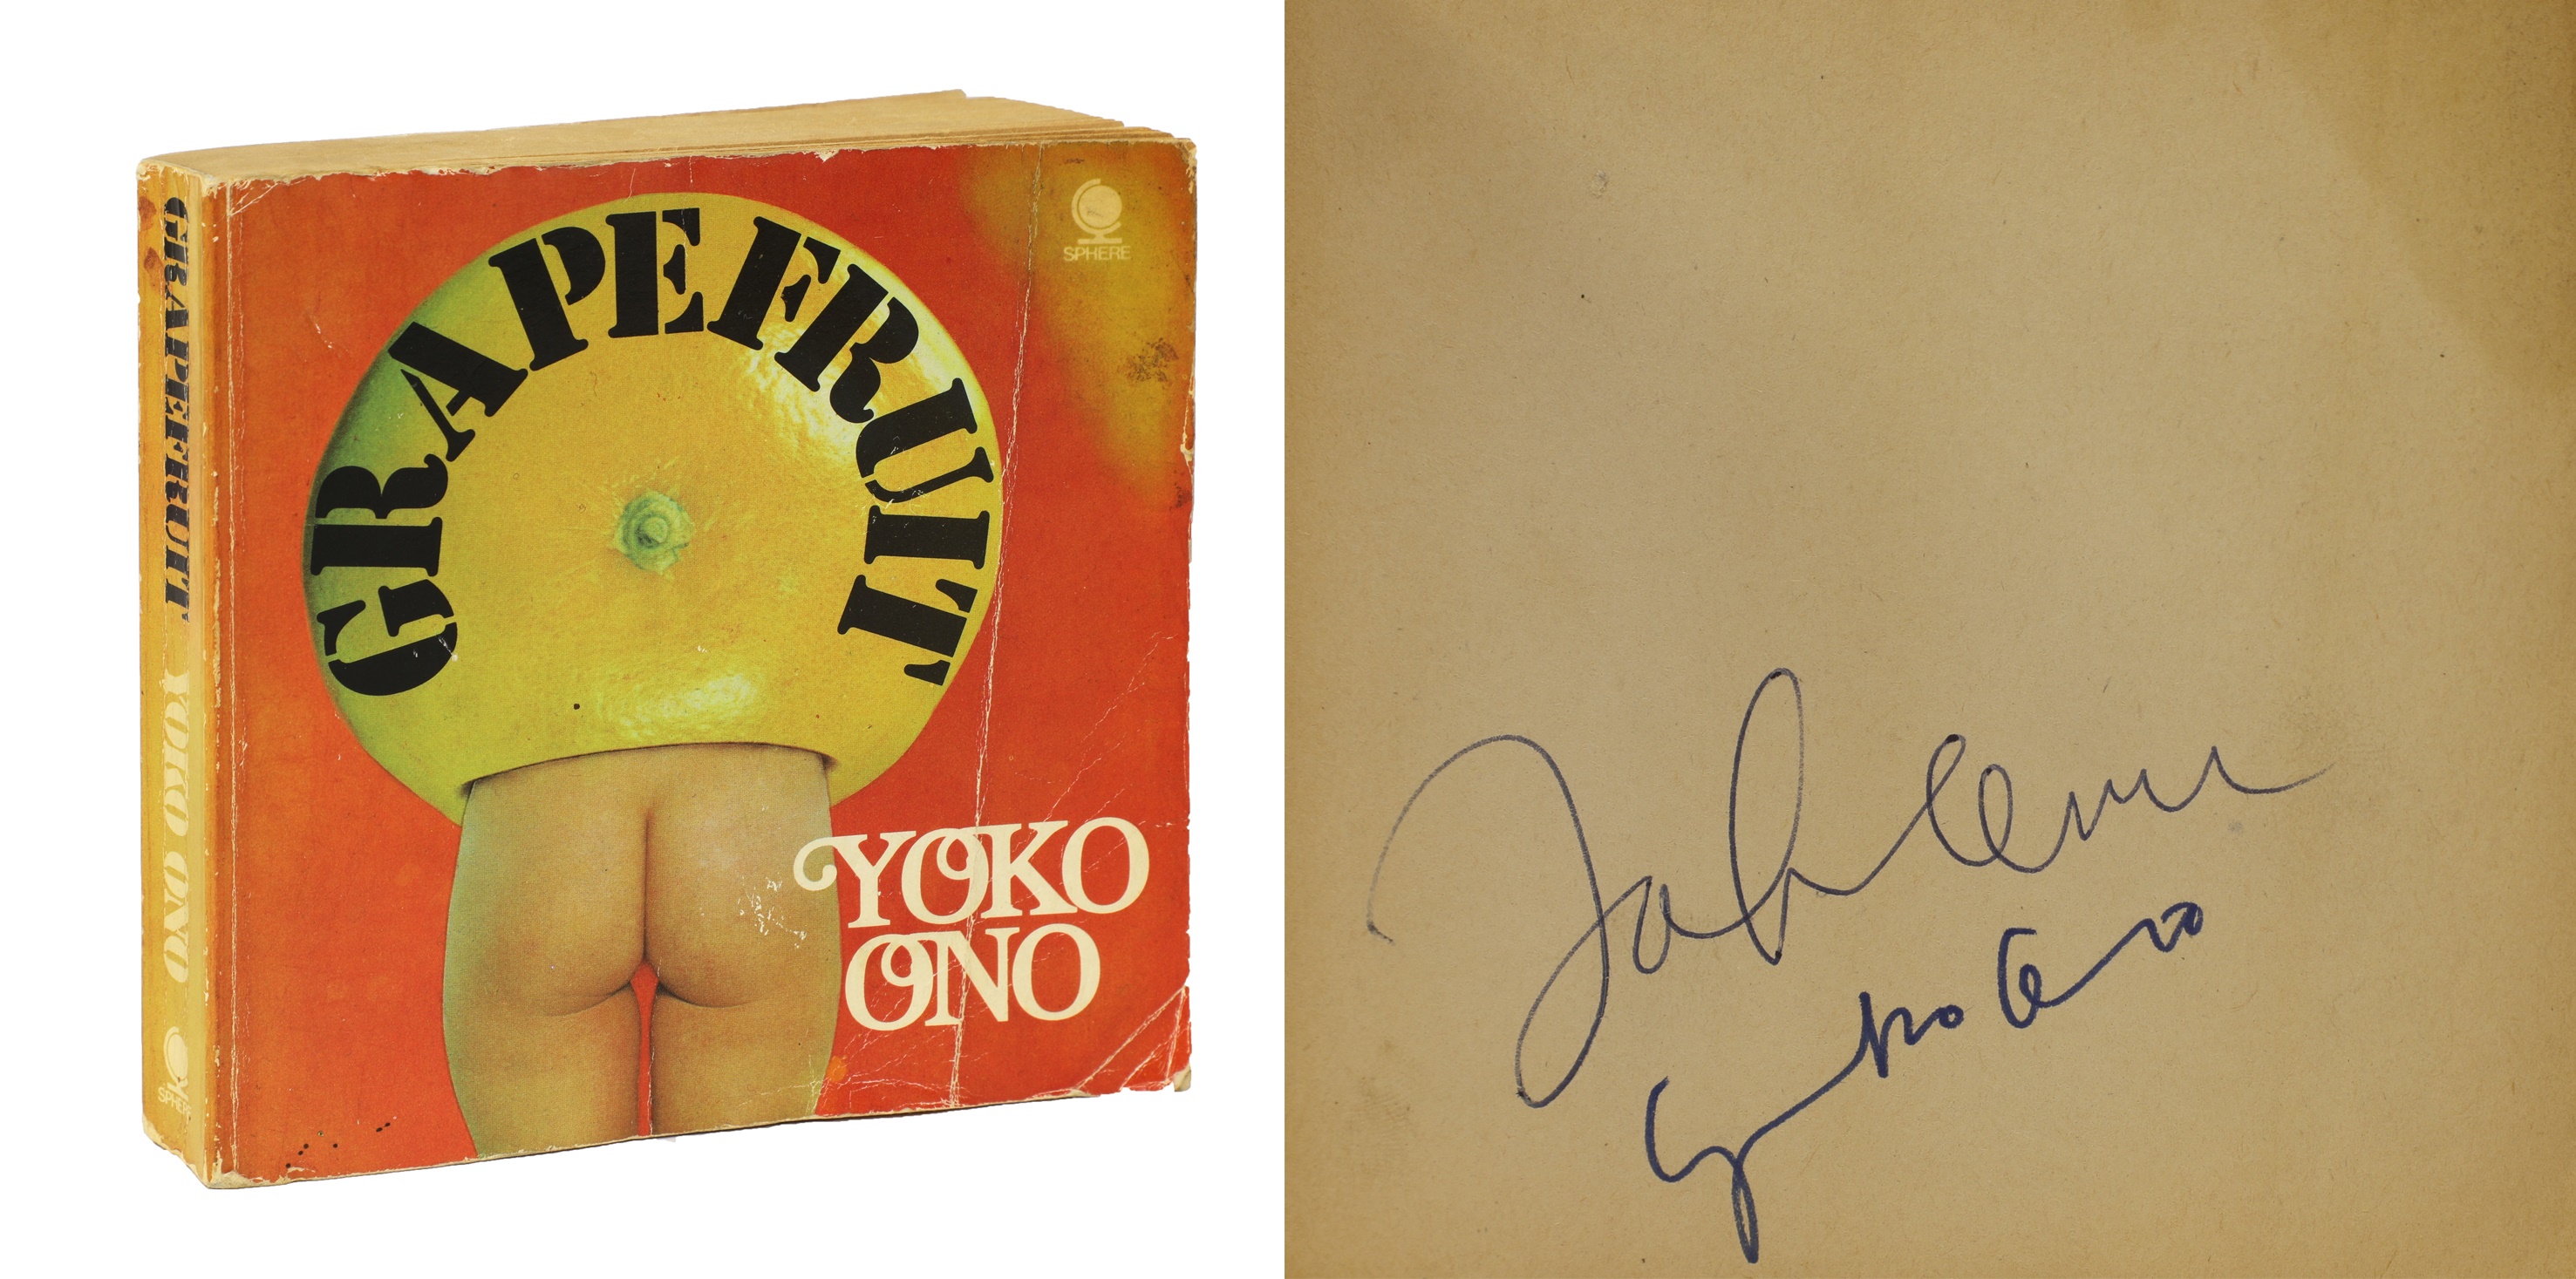 Grapefruit signed by John Lennon and Yoko Ono